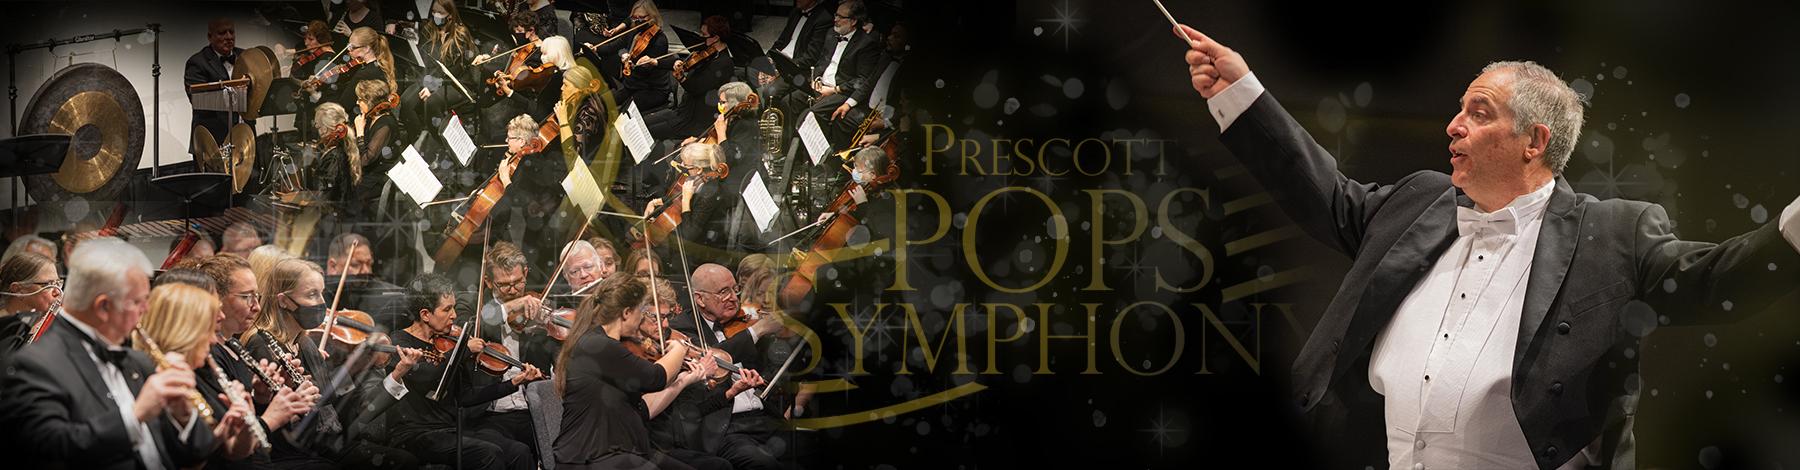 Prescott Pops Symphony Homepage